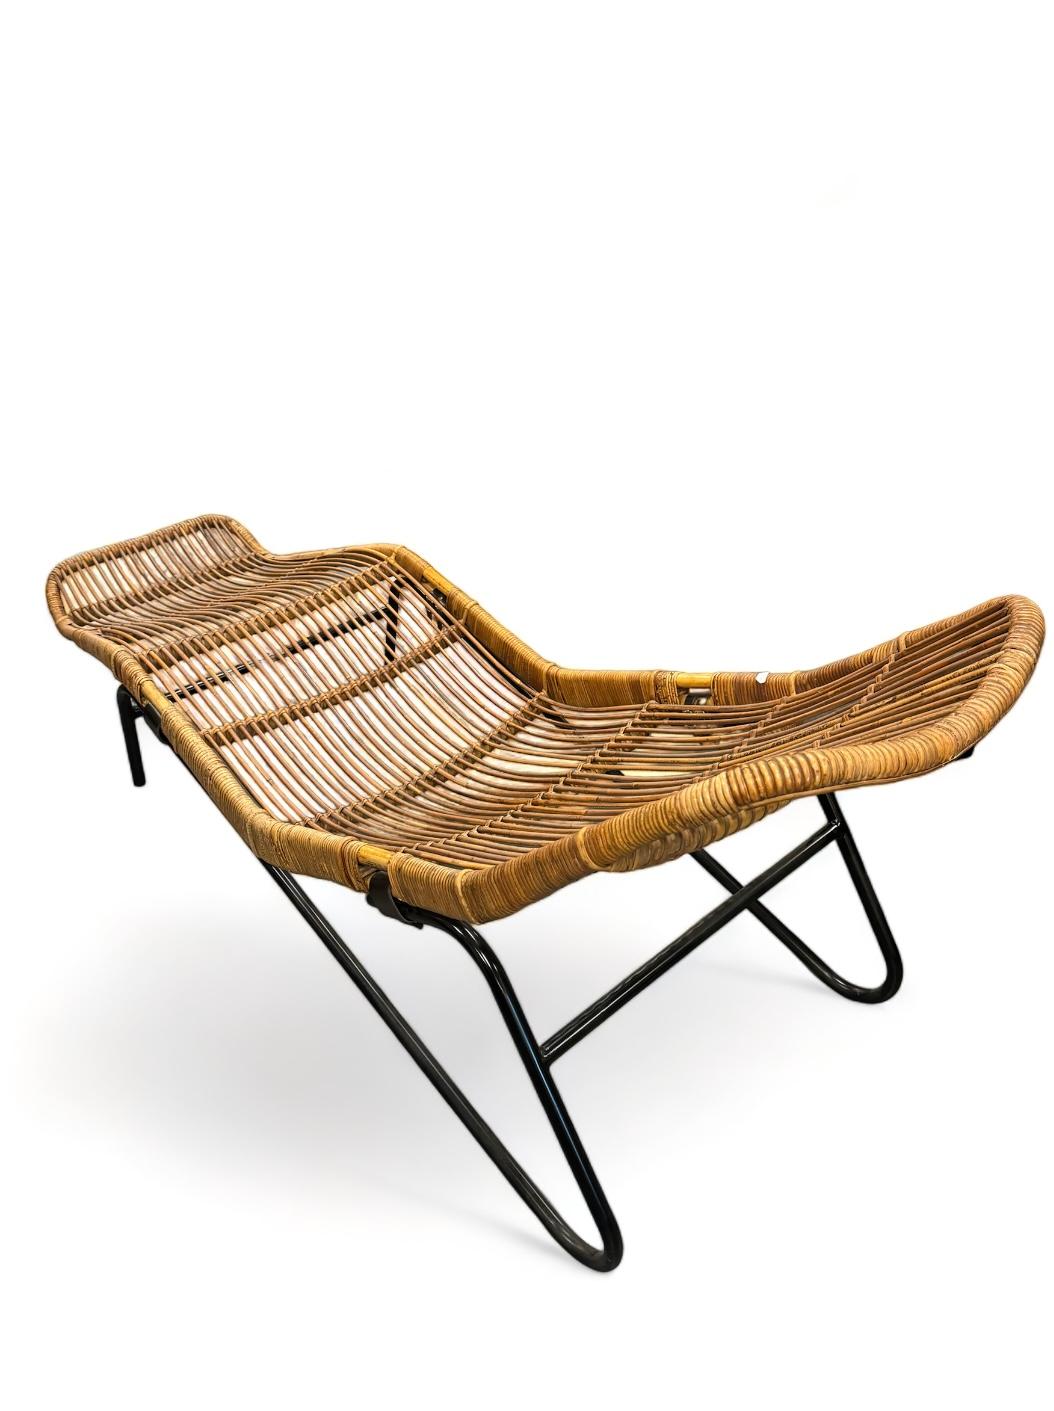 Metal Wicker and metal  Lounge Chair by Dirk Van Sliedrecht Mid modern century  For Sale